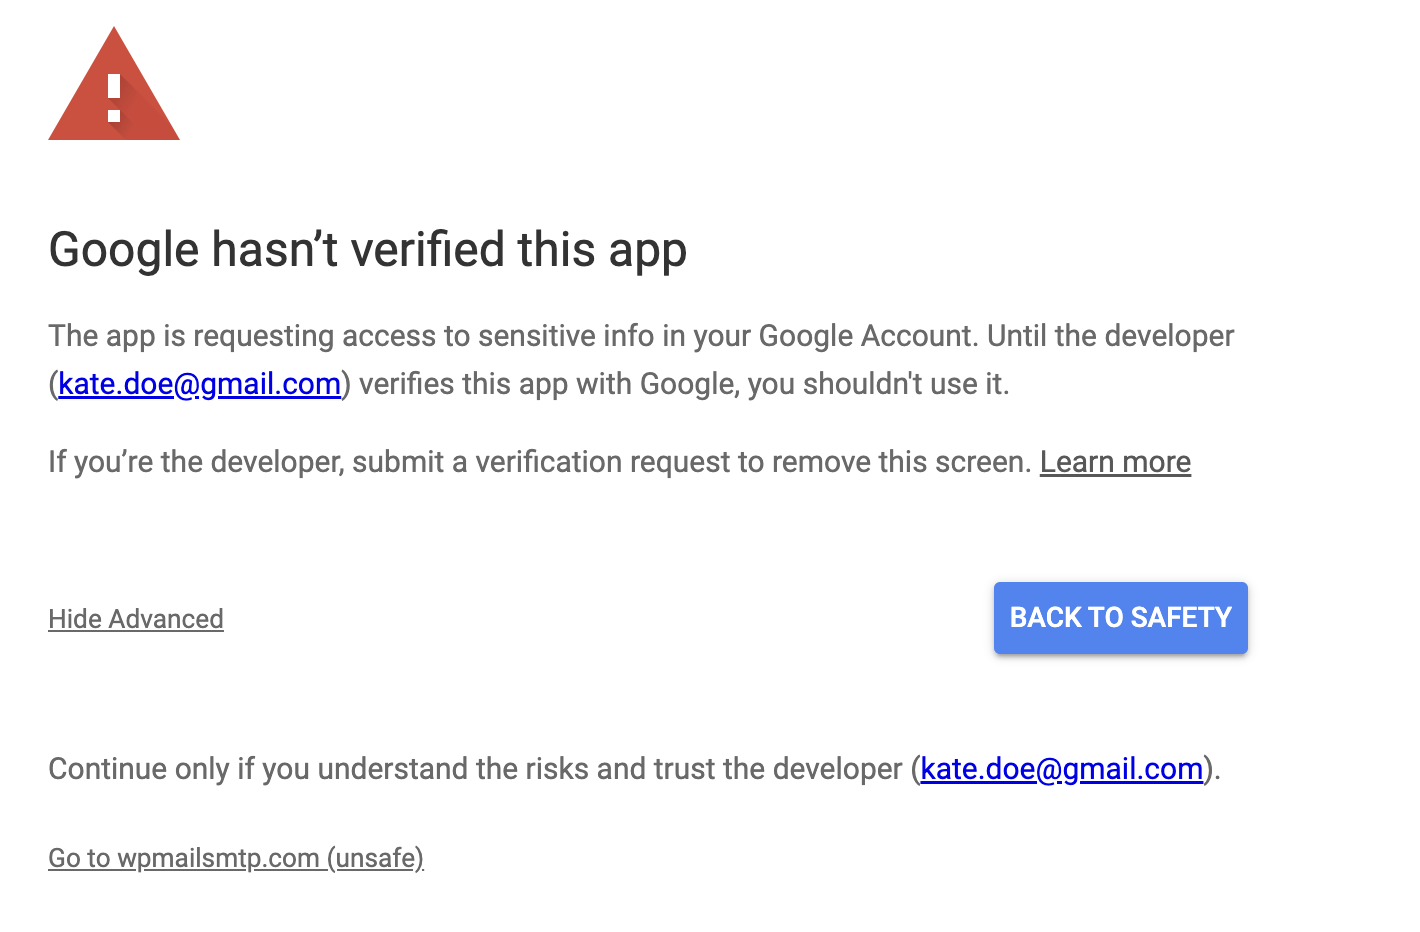 Google hasn't verified this app warning screen 